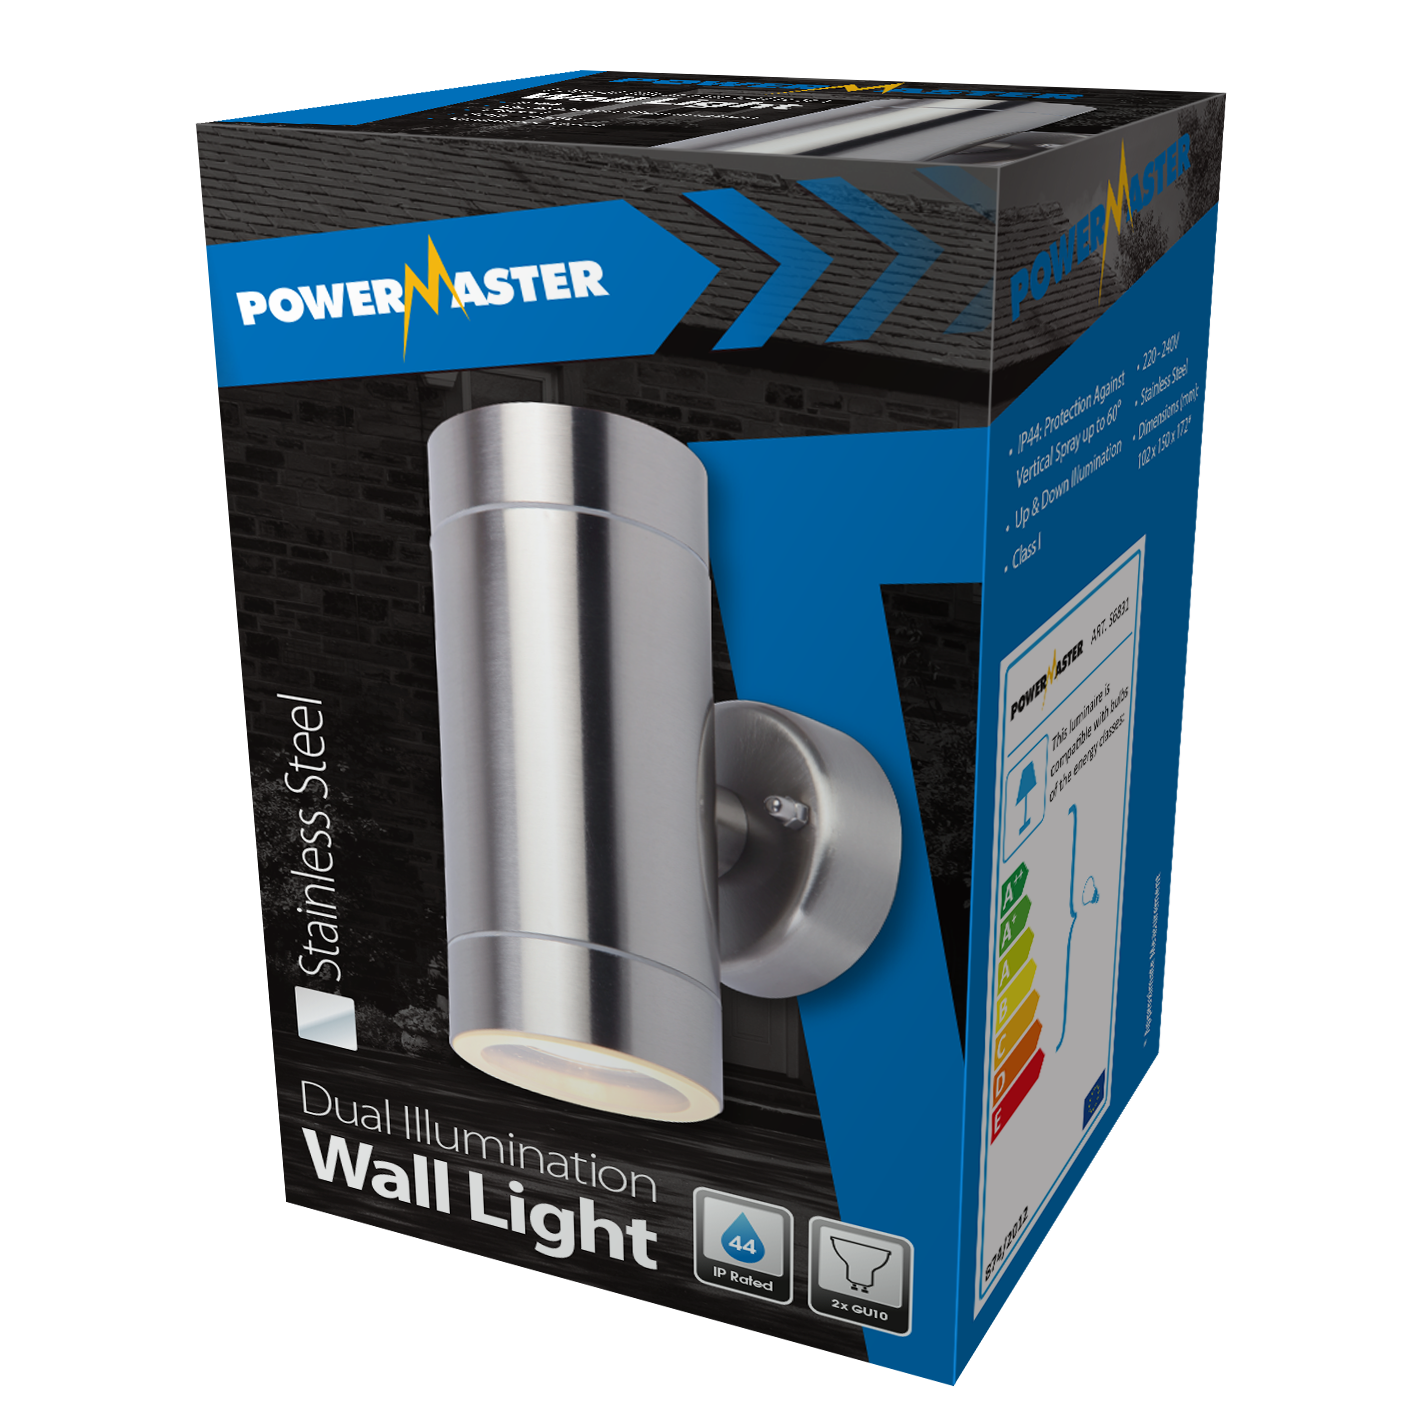 PowerMaster Dual Illumination Wall Light - Stainless Steel